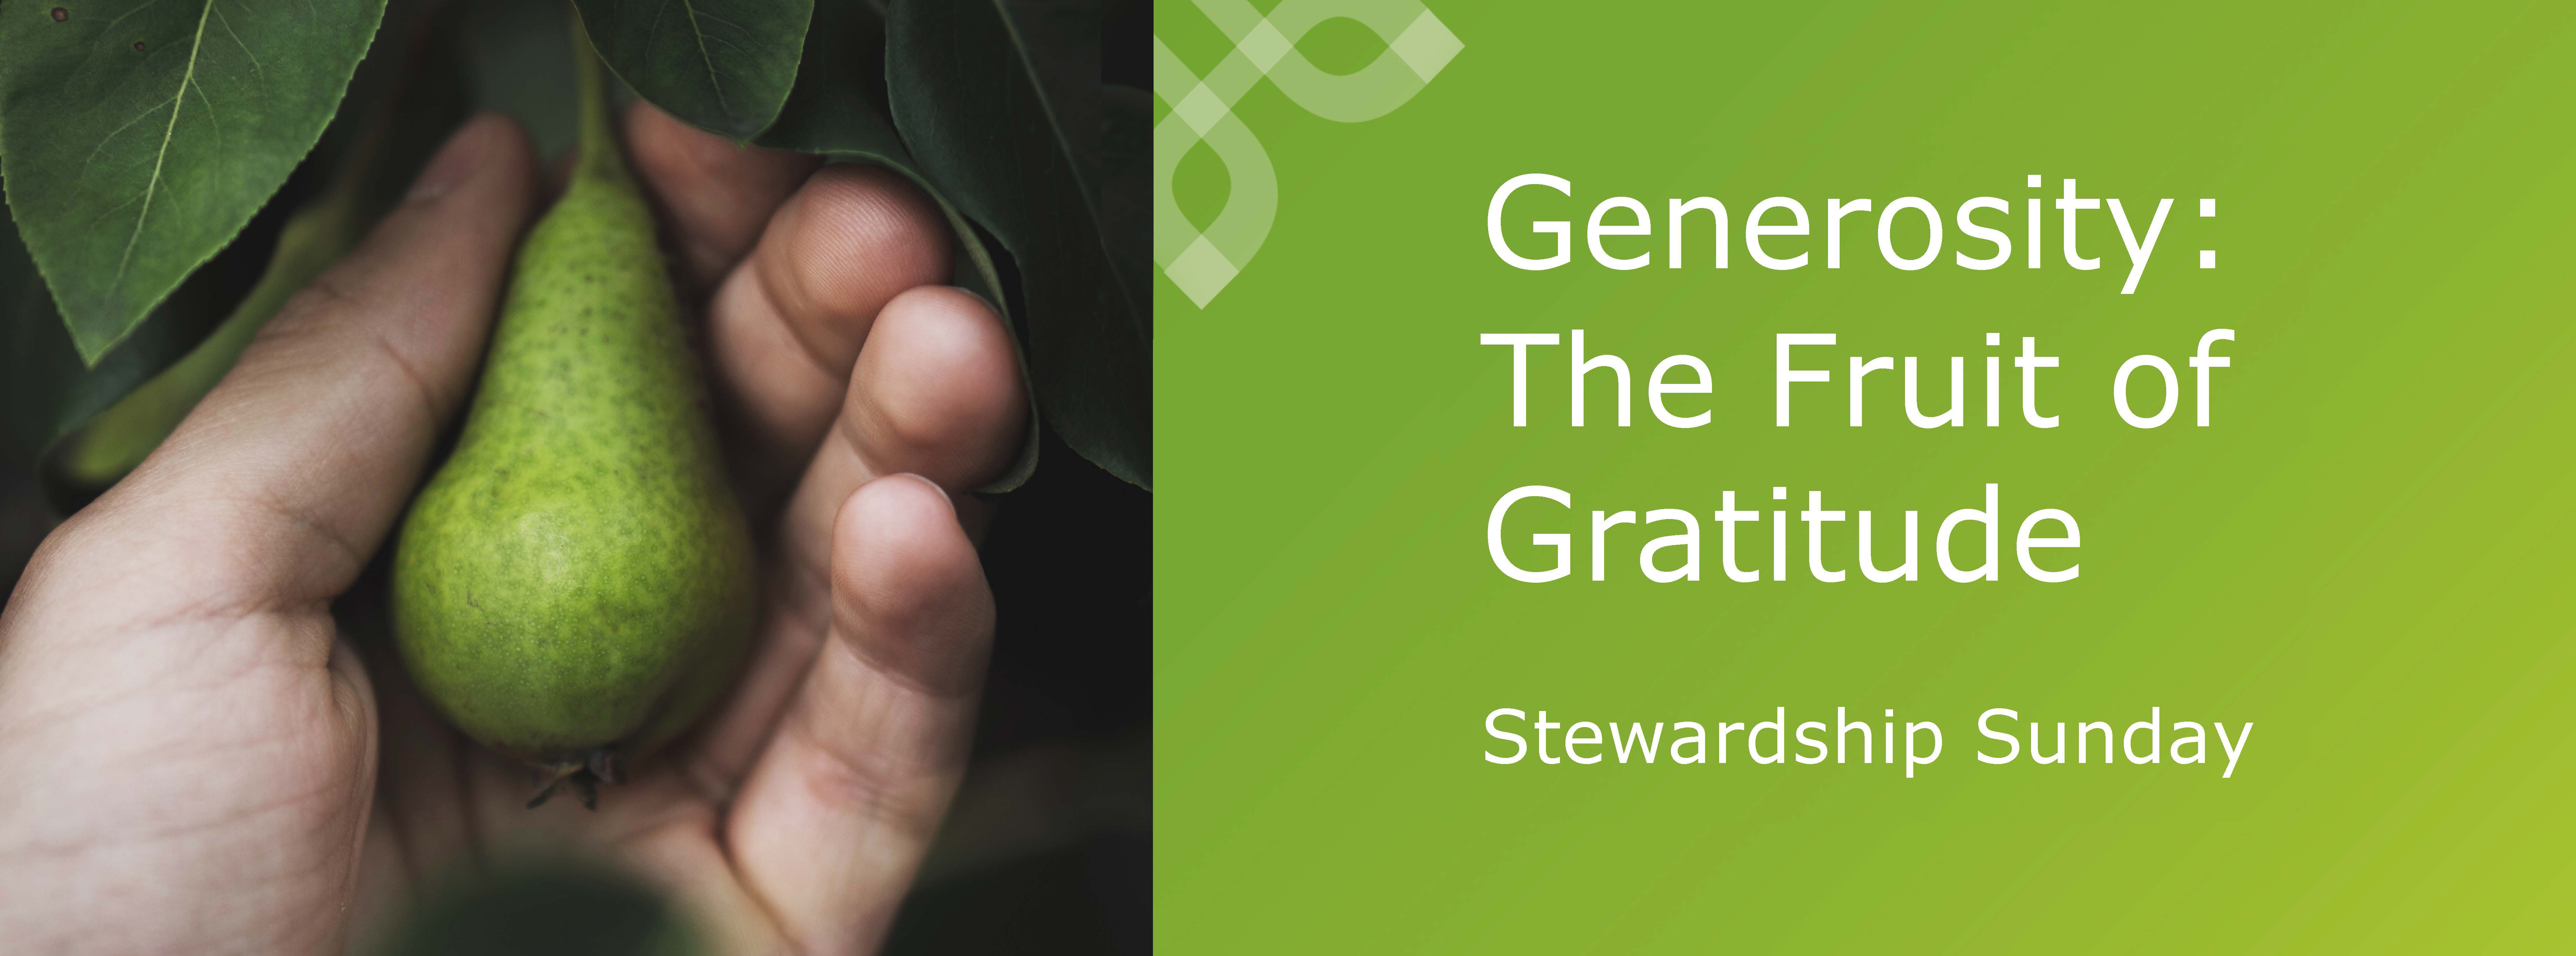 Generosity: The fruit of gratitude